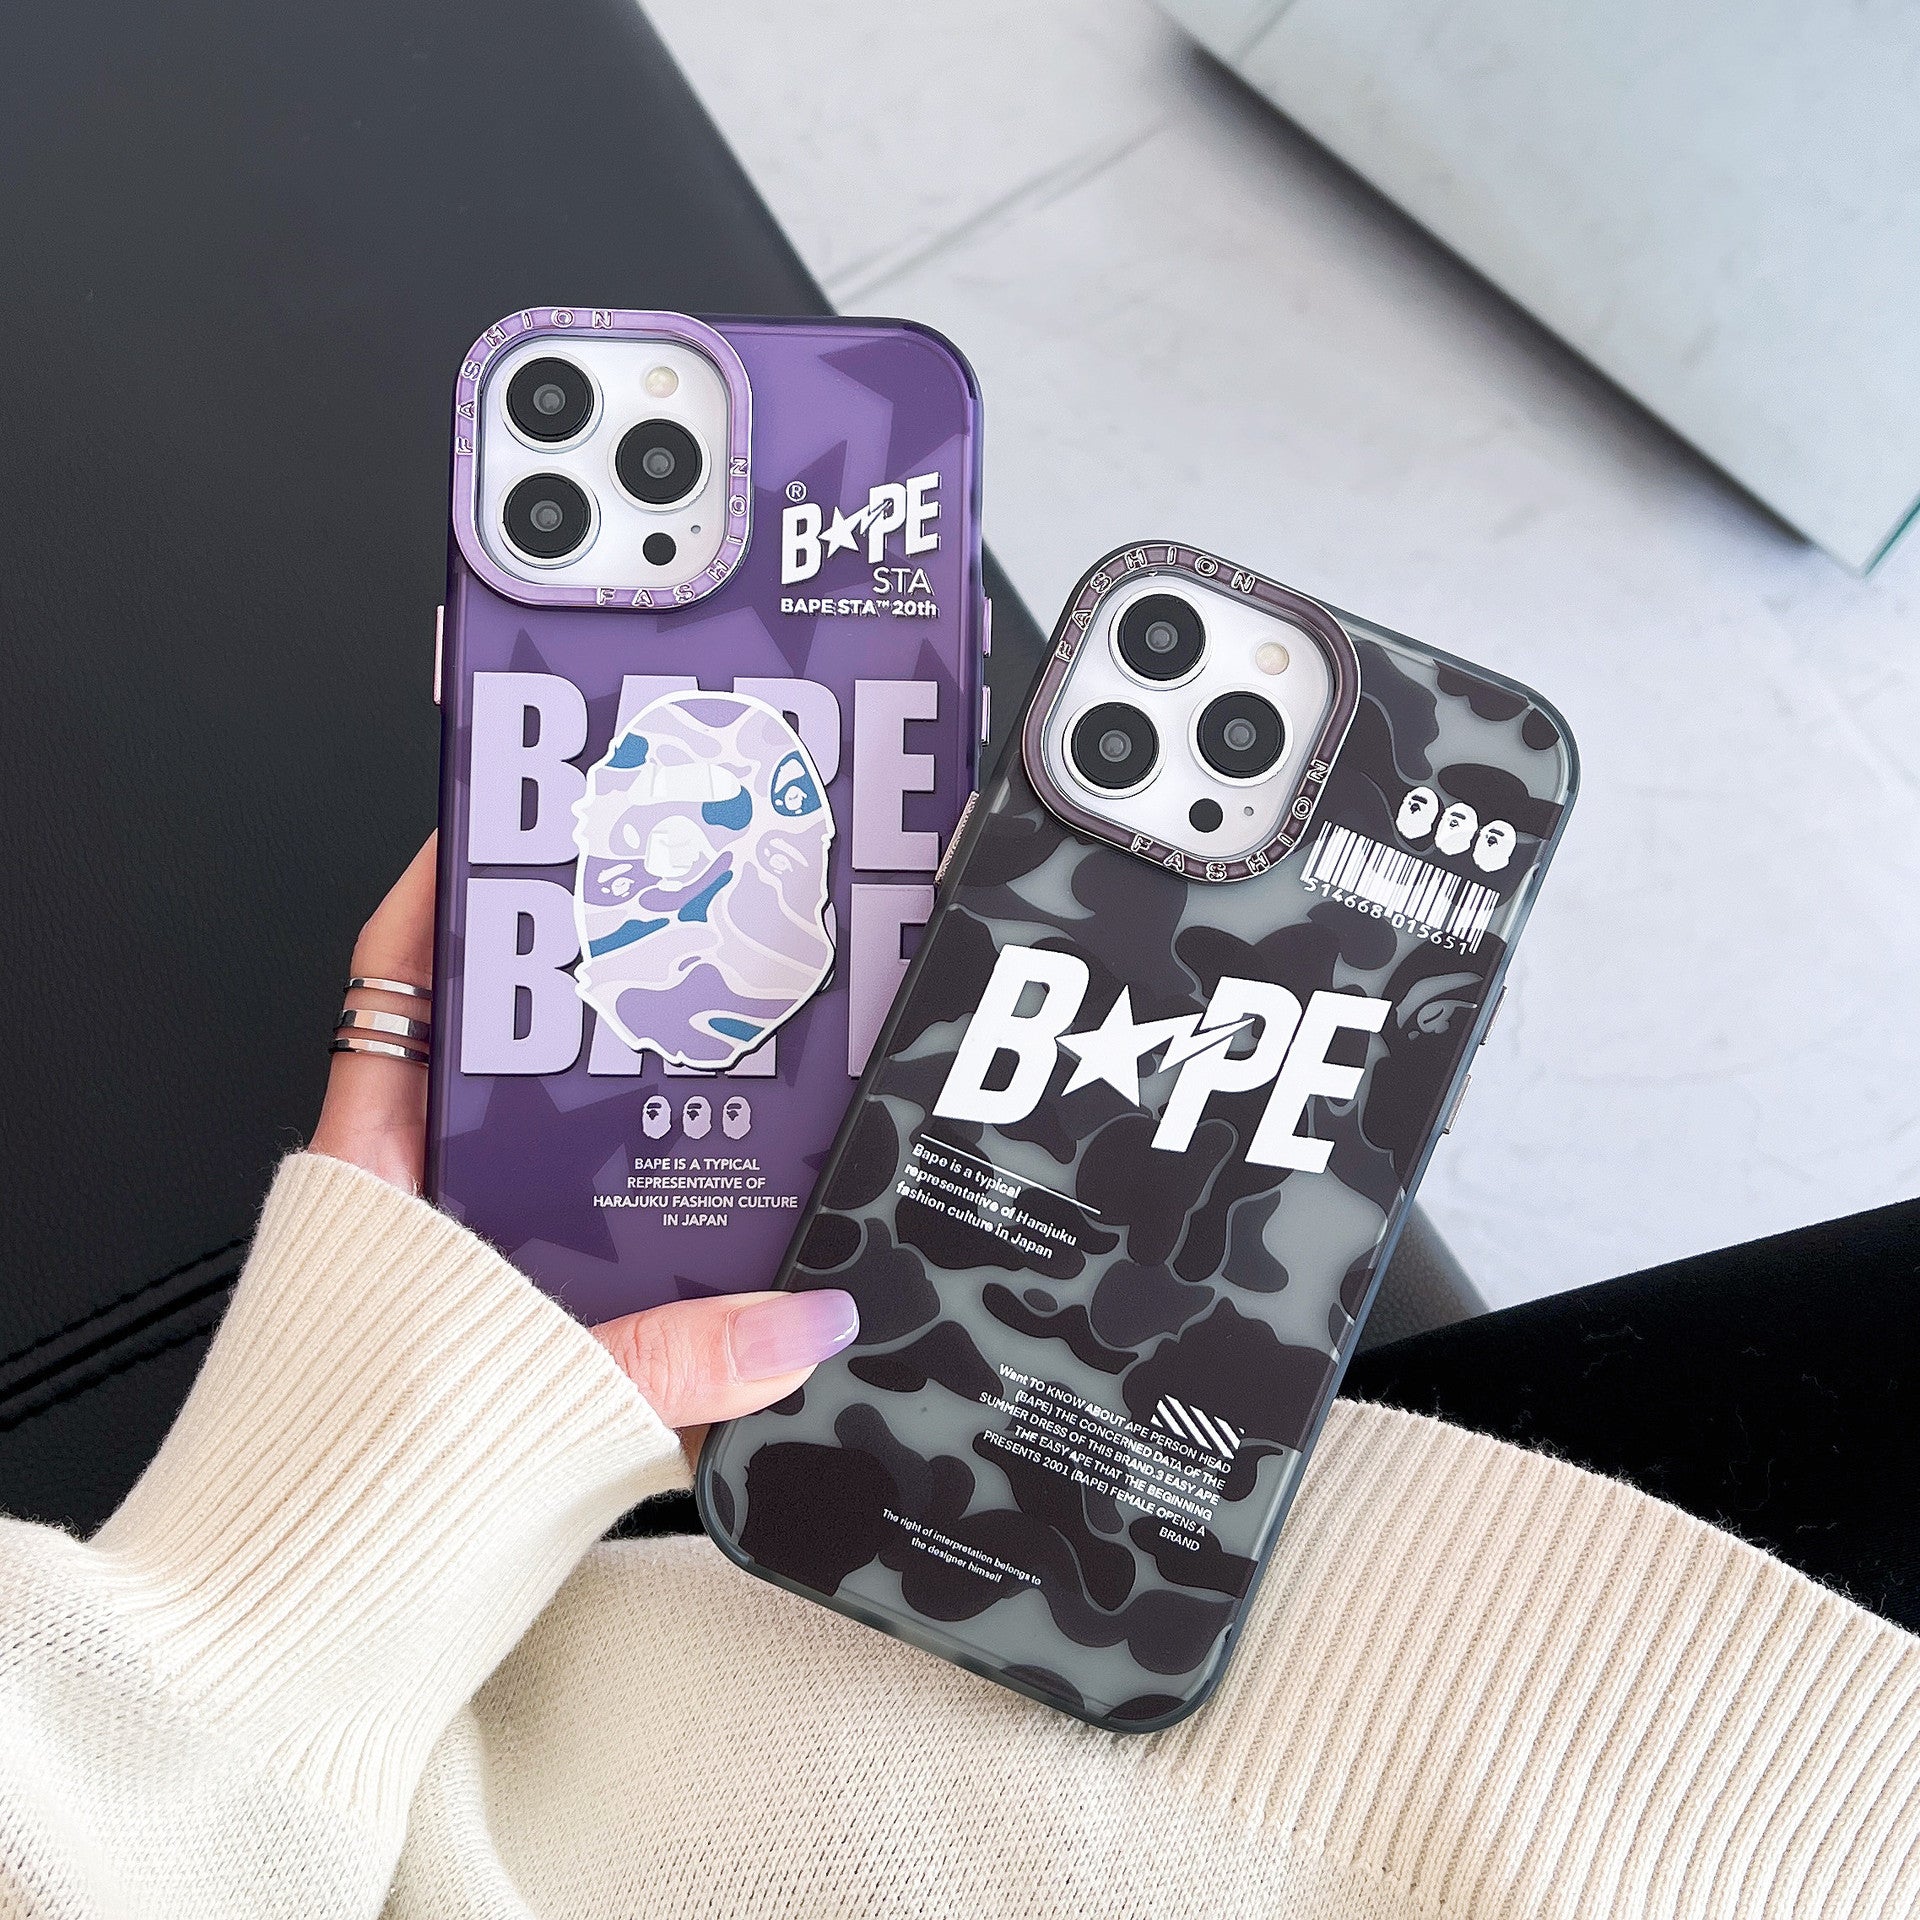 Bape iphone Case